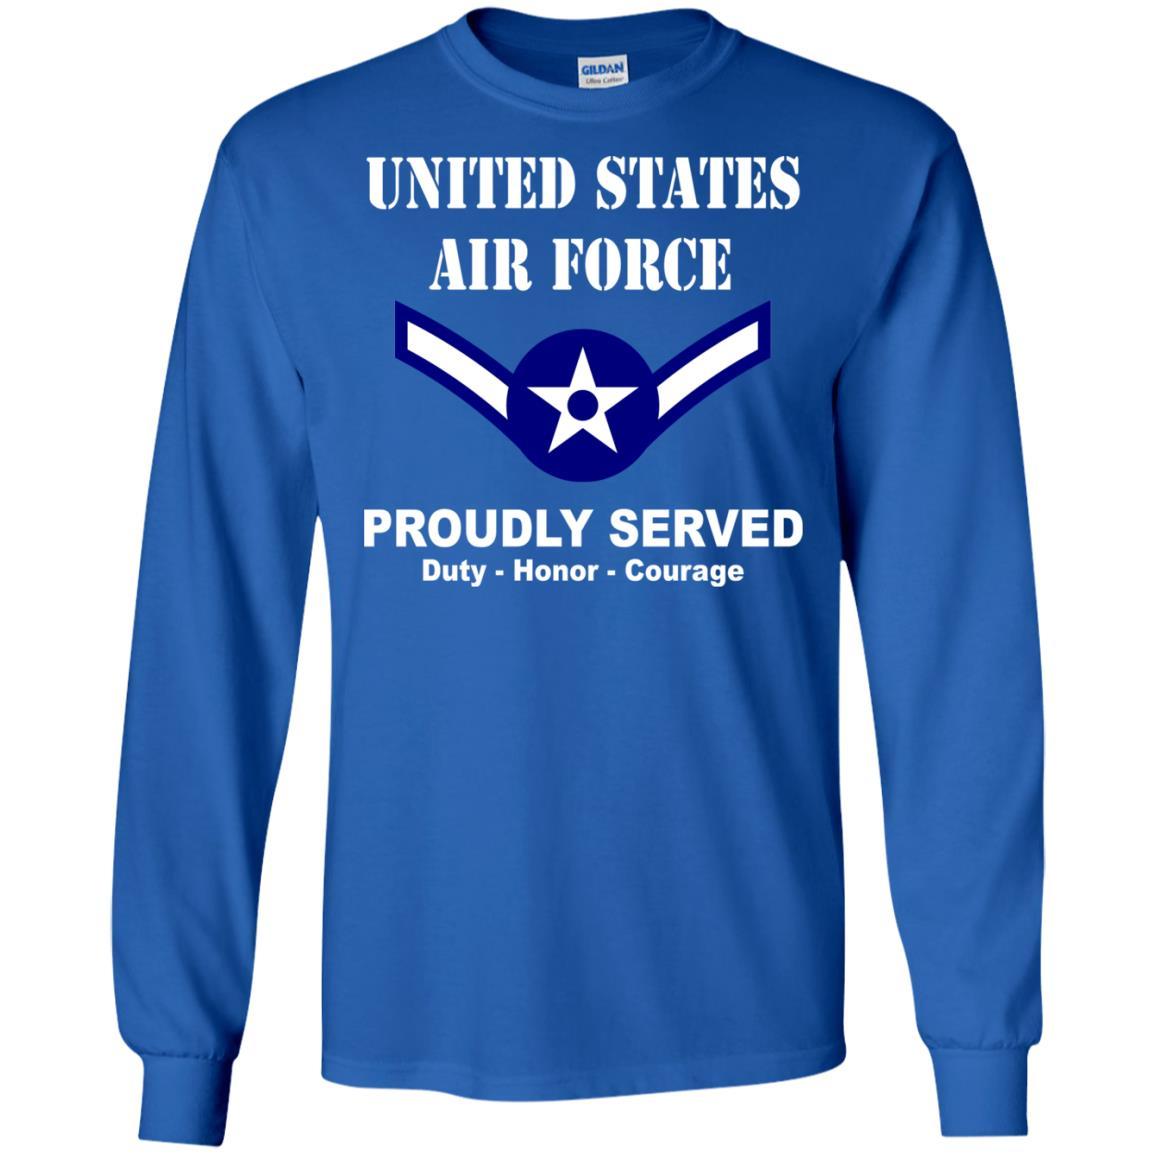 US Air Force E-2 Airman Amn E2 Ranks Enlisted Airman Men Front T Shirt For Air Force-TShirt-USAF-Veterans Nation